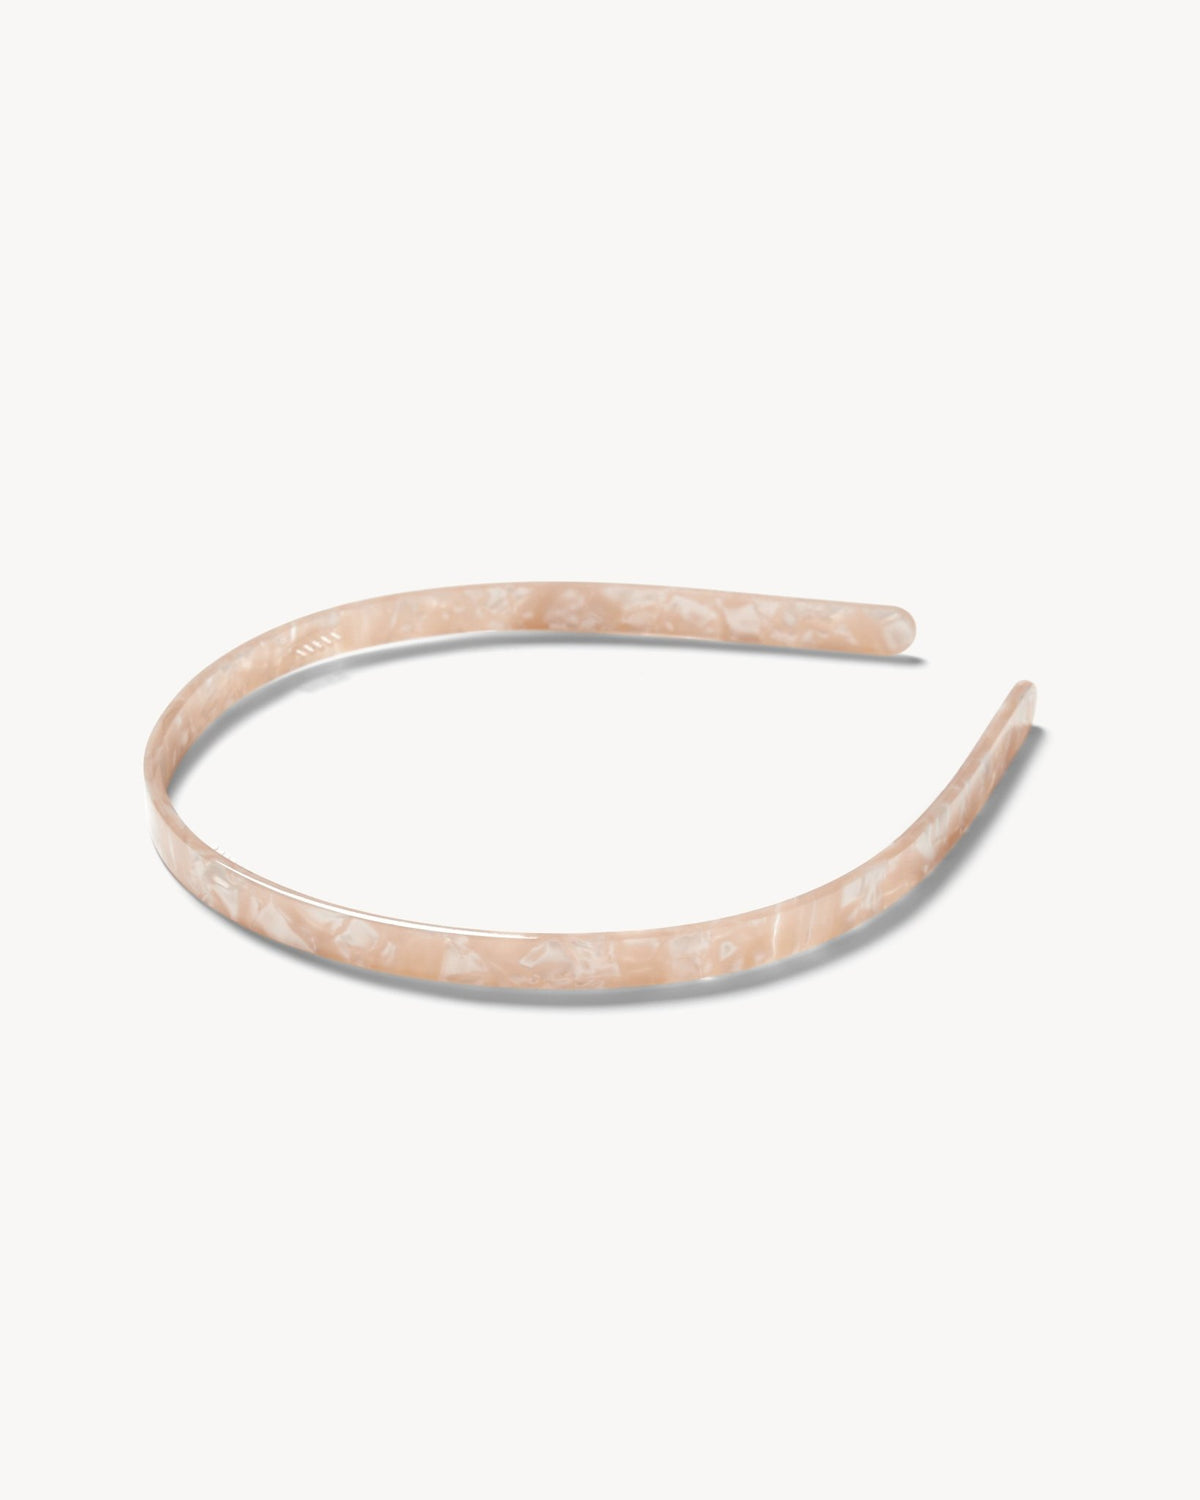 Ultralight Thin Headband in Peach Shell - MACHETE